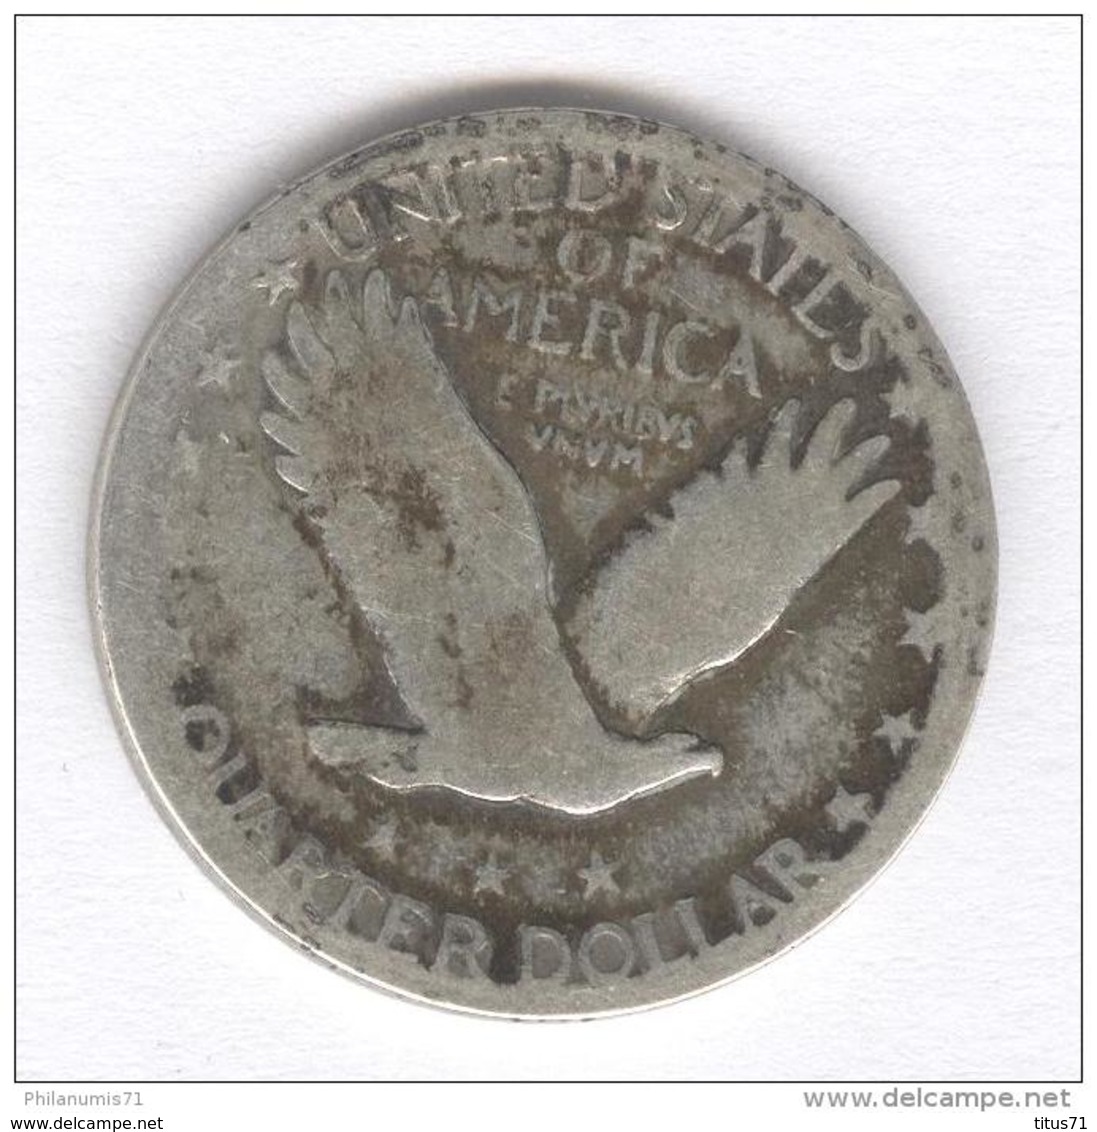 Quarter Etats Unis / United States 1917-1924 - 1916-1930: Standing Liberty